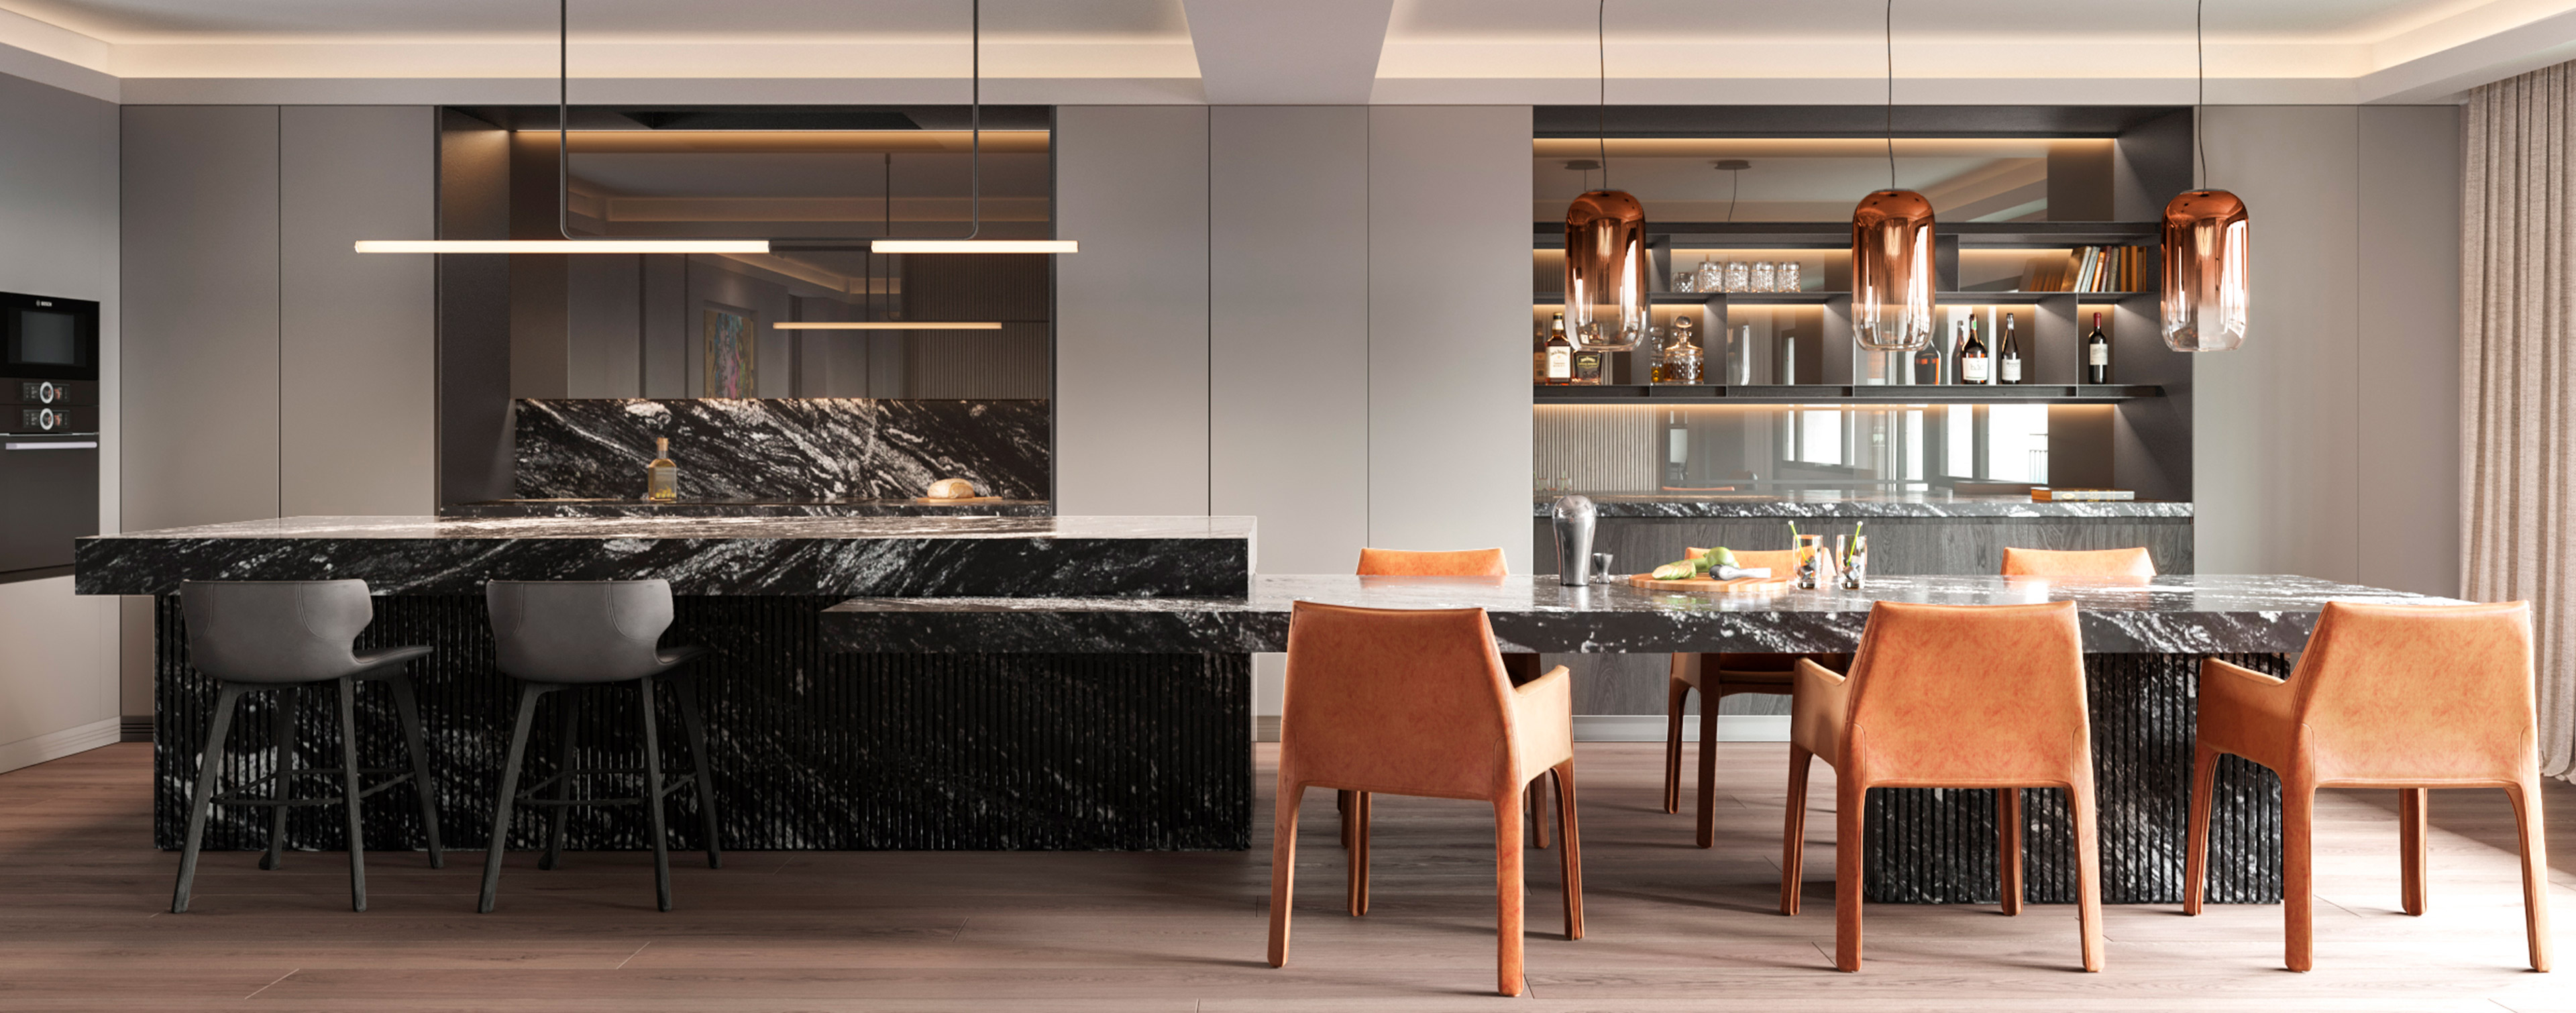 luv studio luxury architects madrid padilla apartment IMG 02 - LUV Studio - Arquitectura y diseño - Barcelona